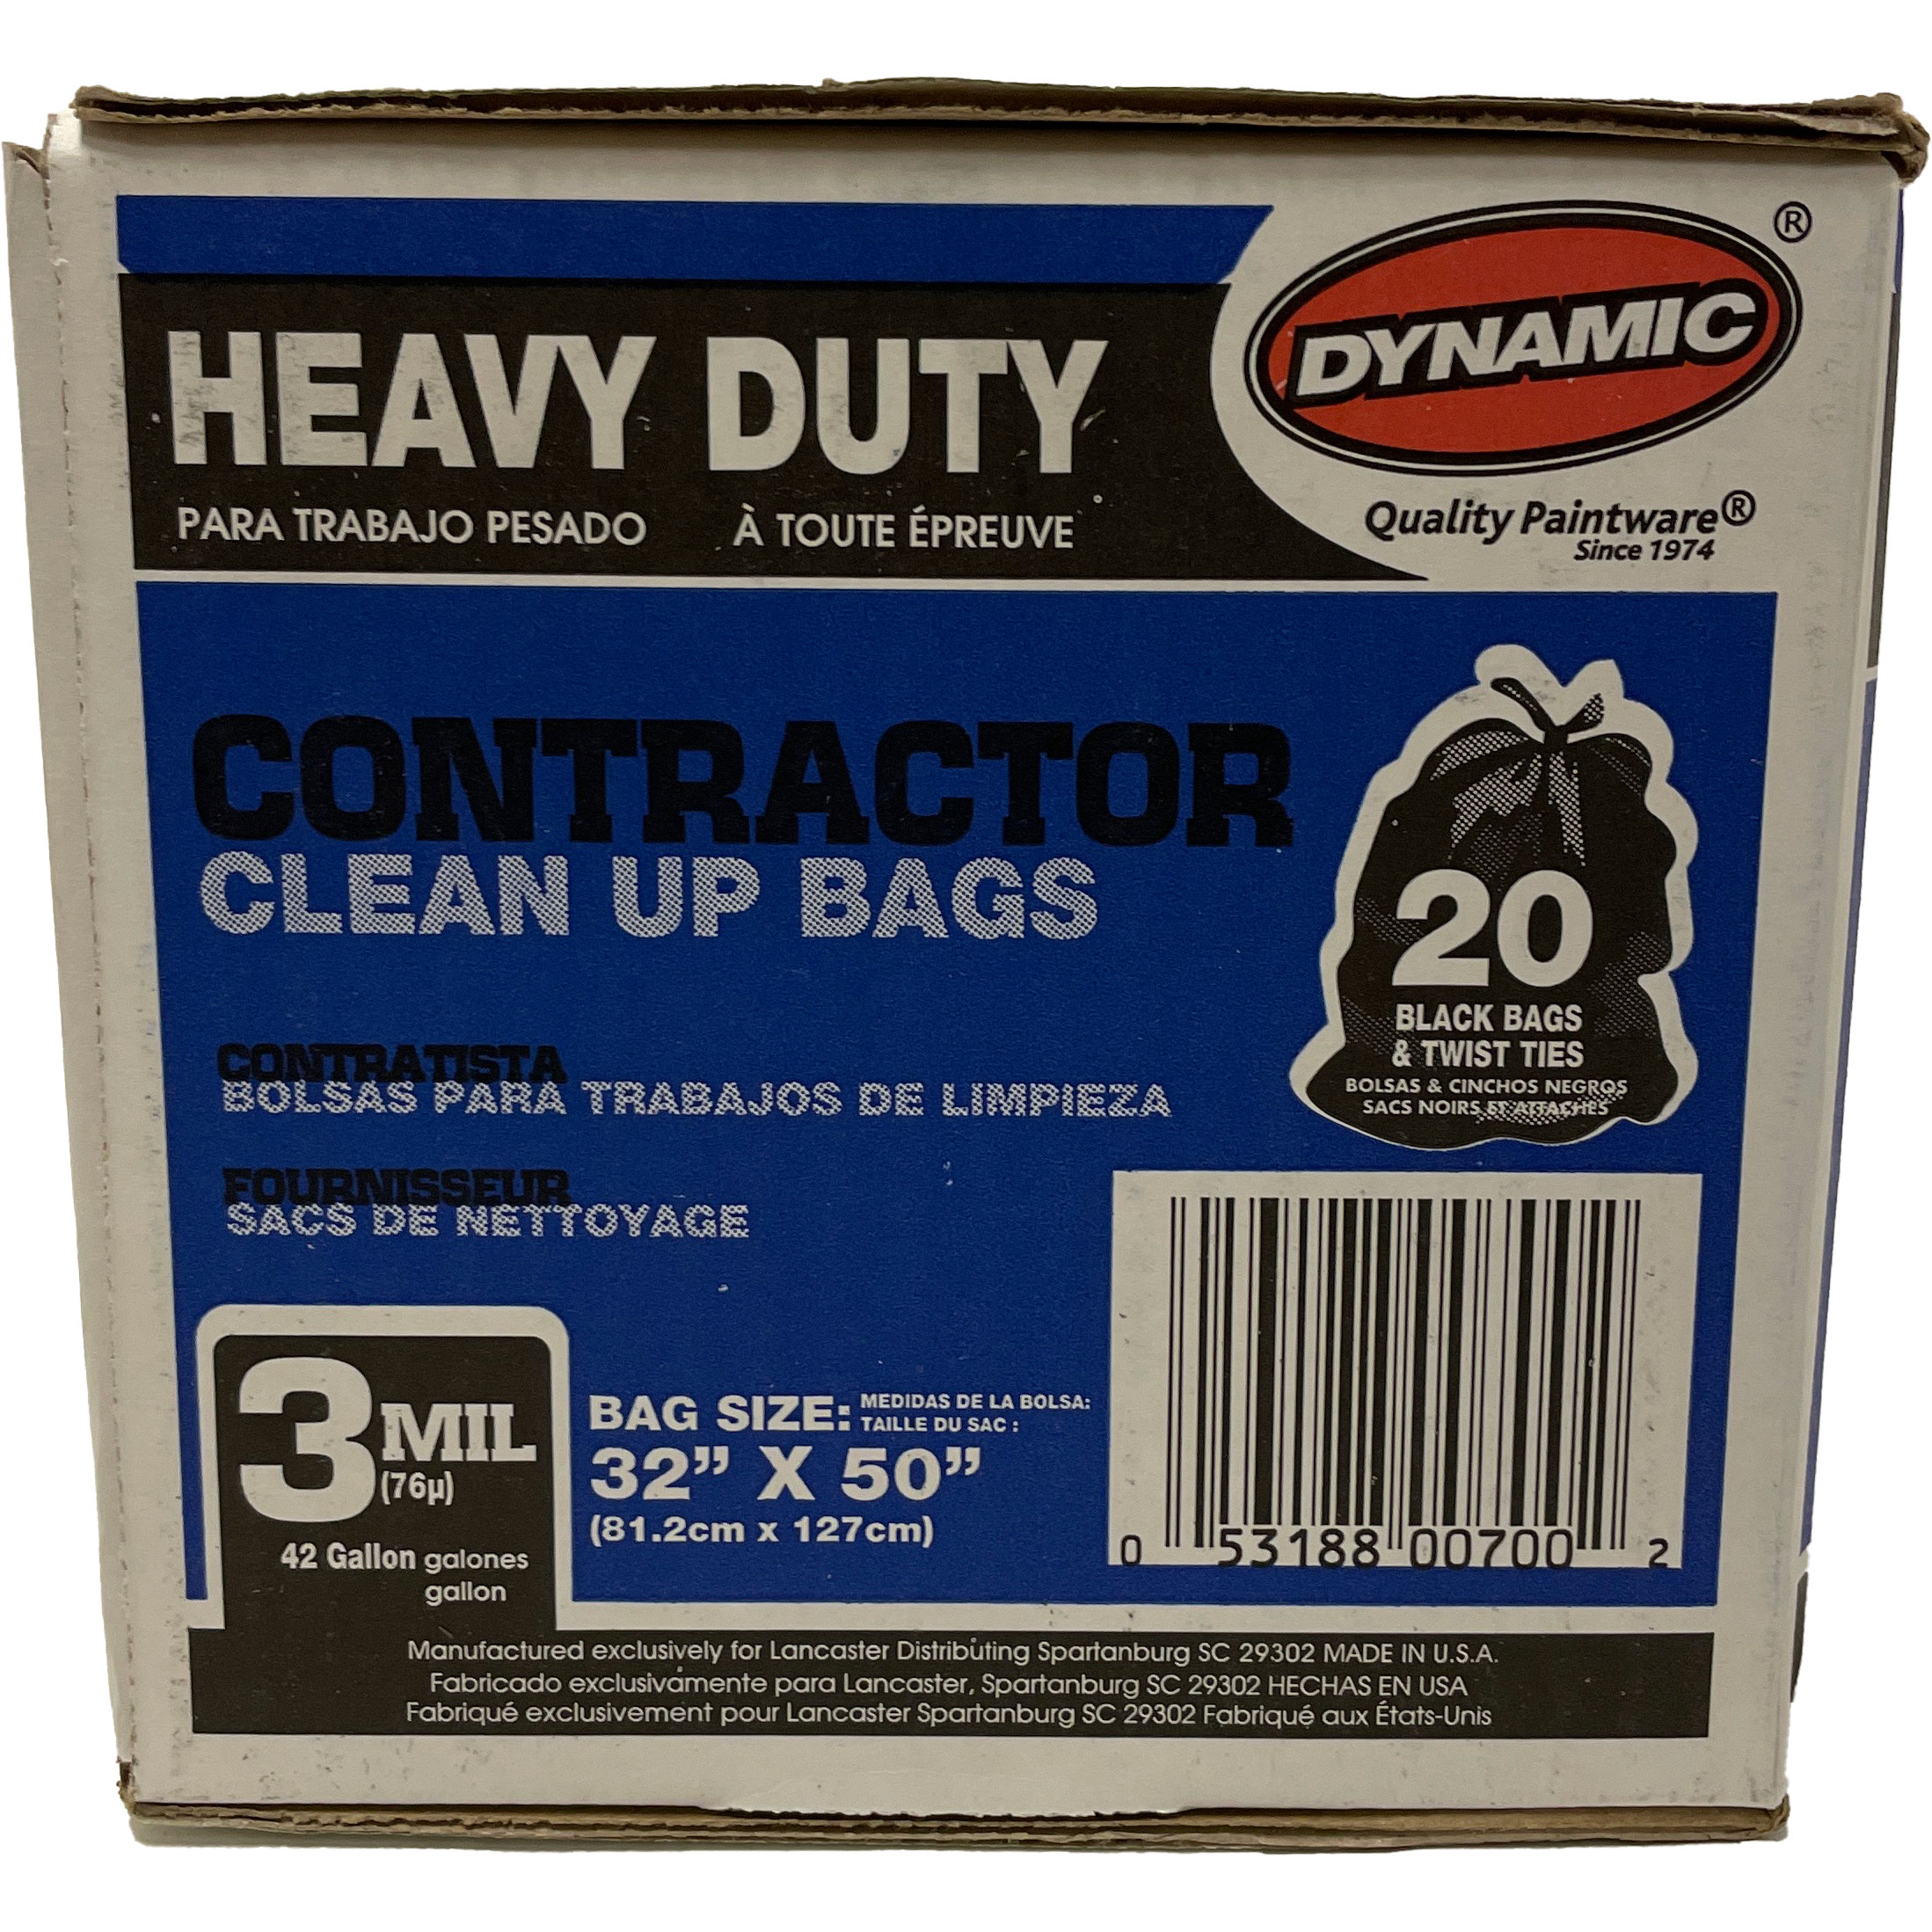 Dynamic 00700 Heavy Duty Black Contractor Bags, 3mil, 42 Gallon, 32" x 50", 20 Bags w/ Twist Ties